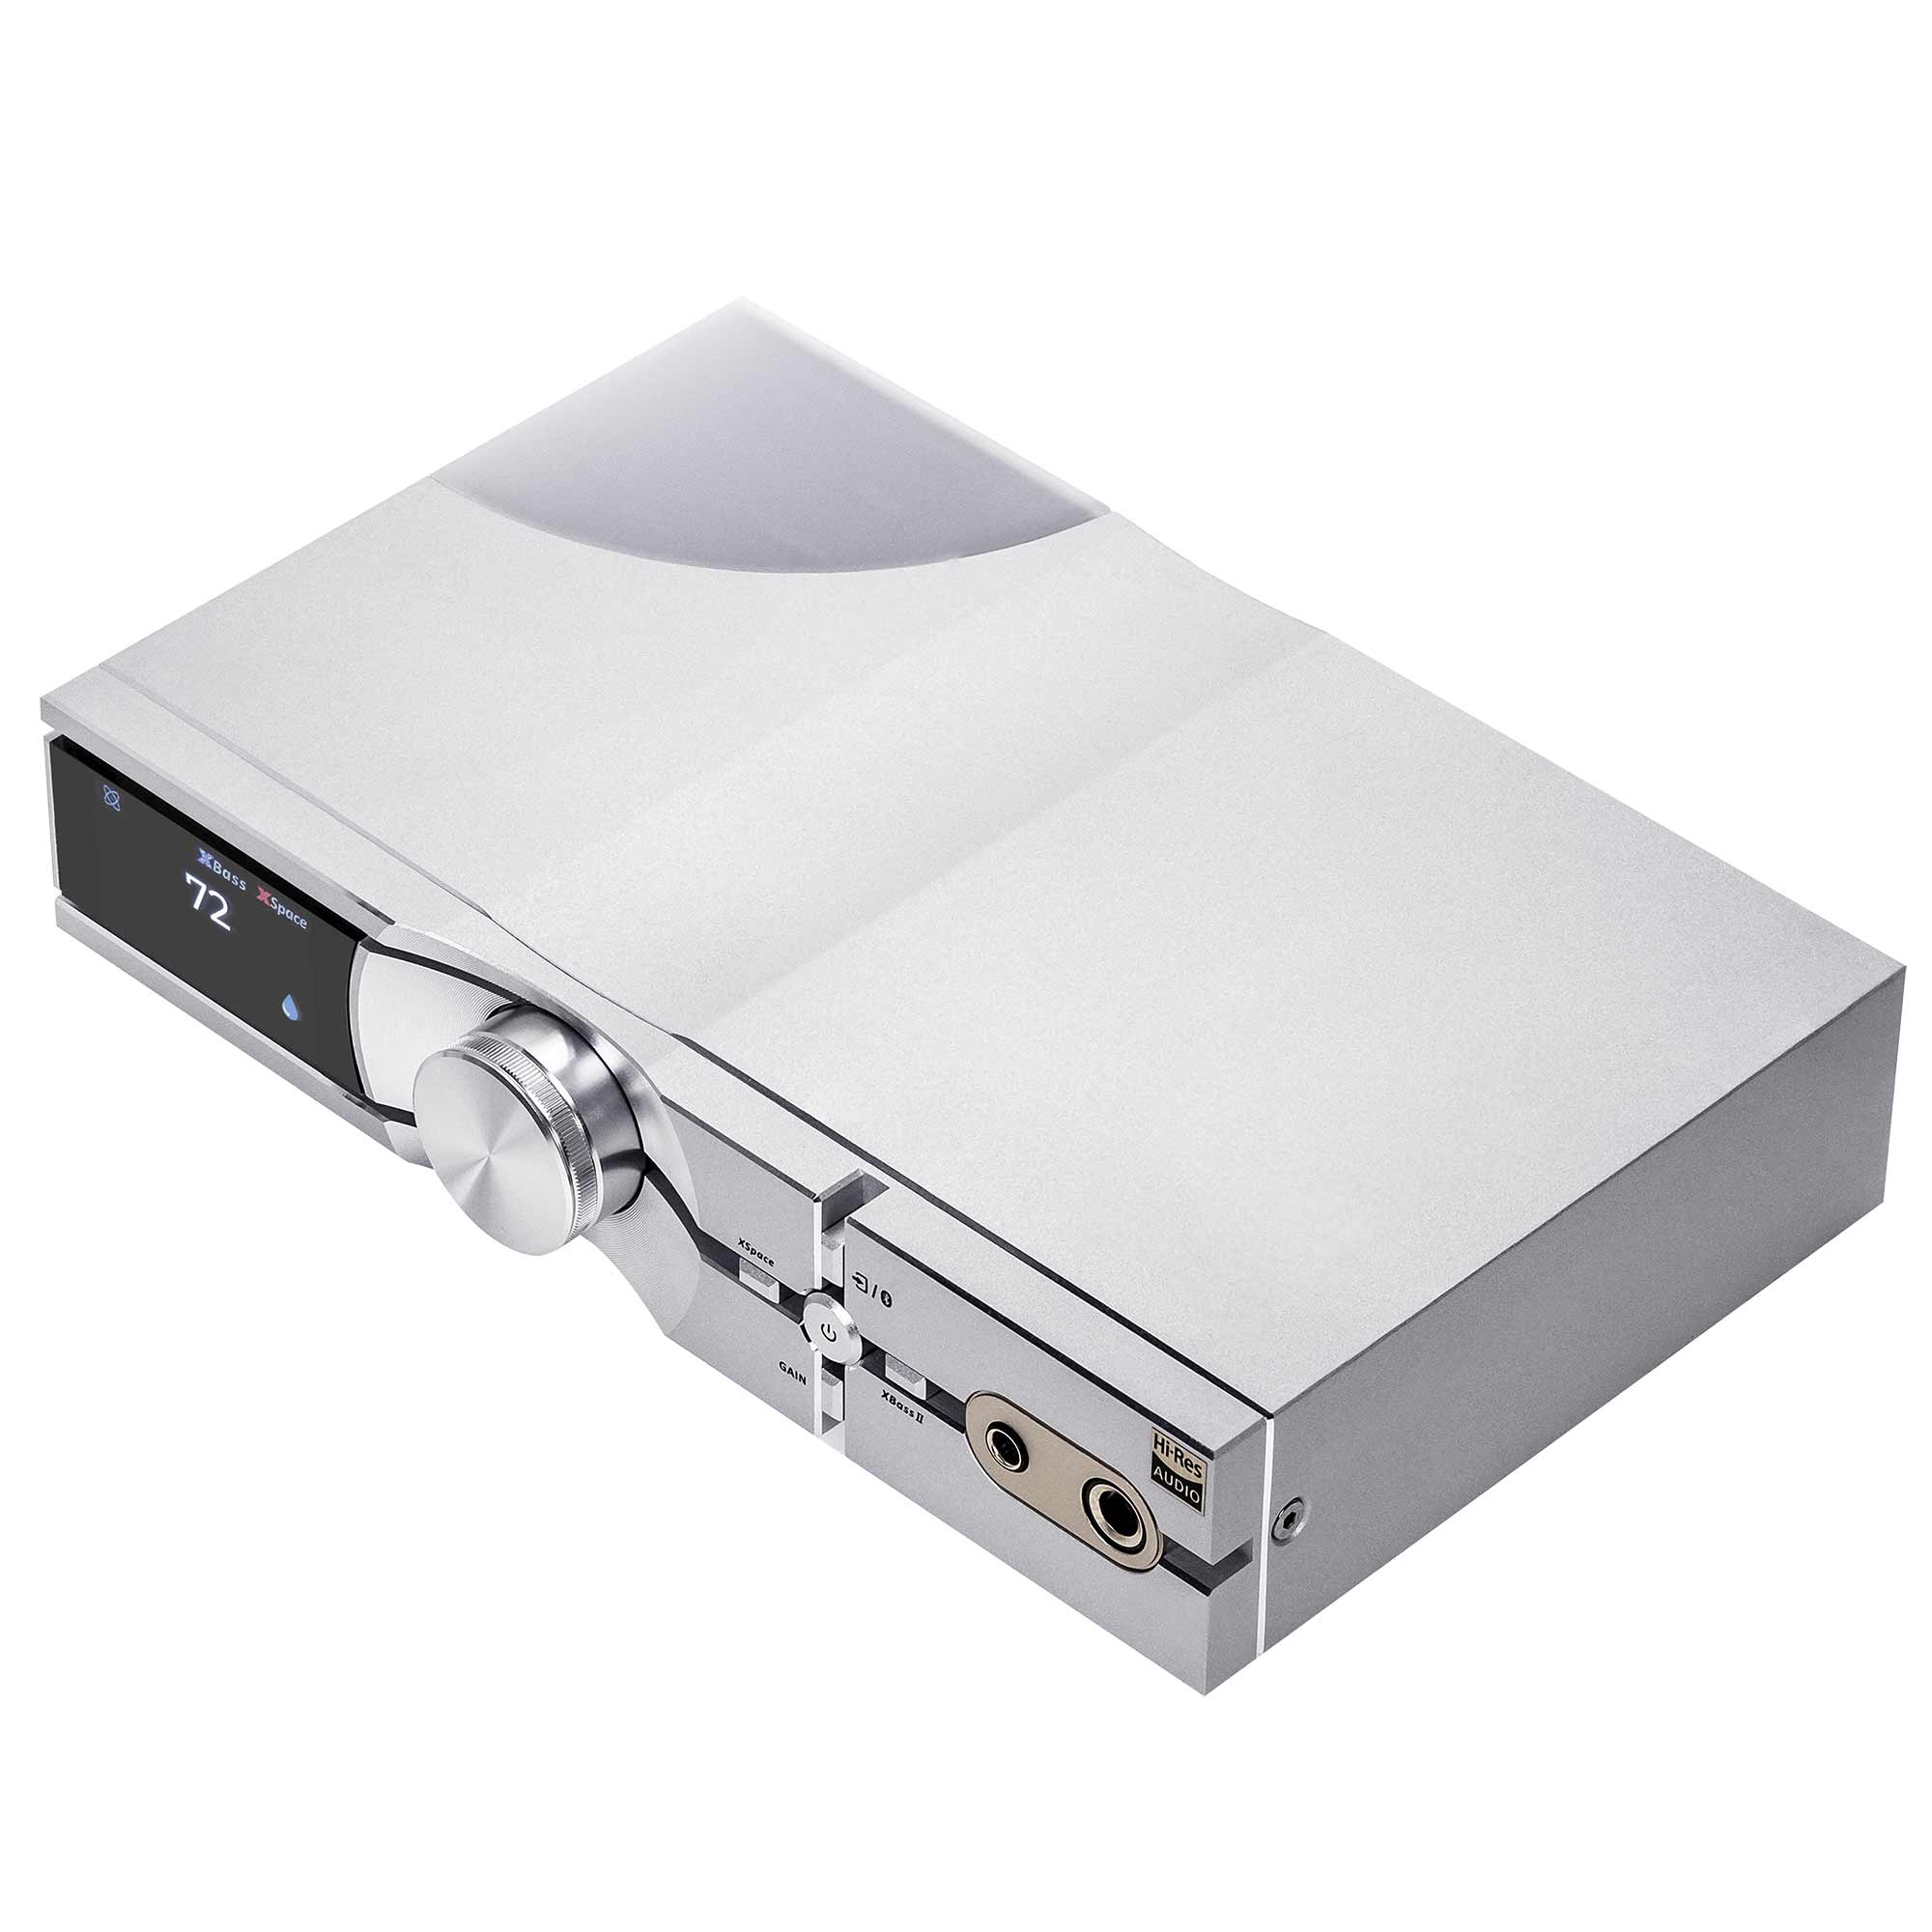 iFi Audio NEO iDSD 2 Fully Balanced Desktop DAC & Headphone Amplifier